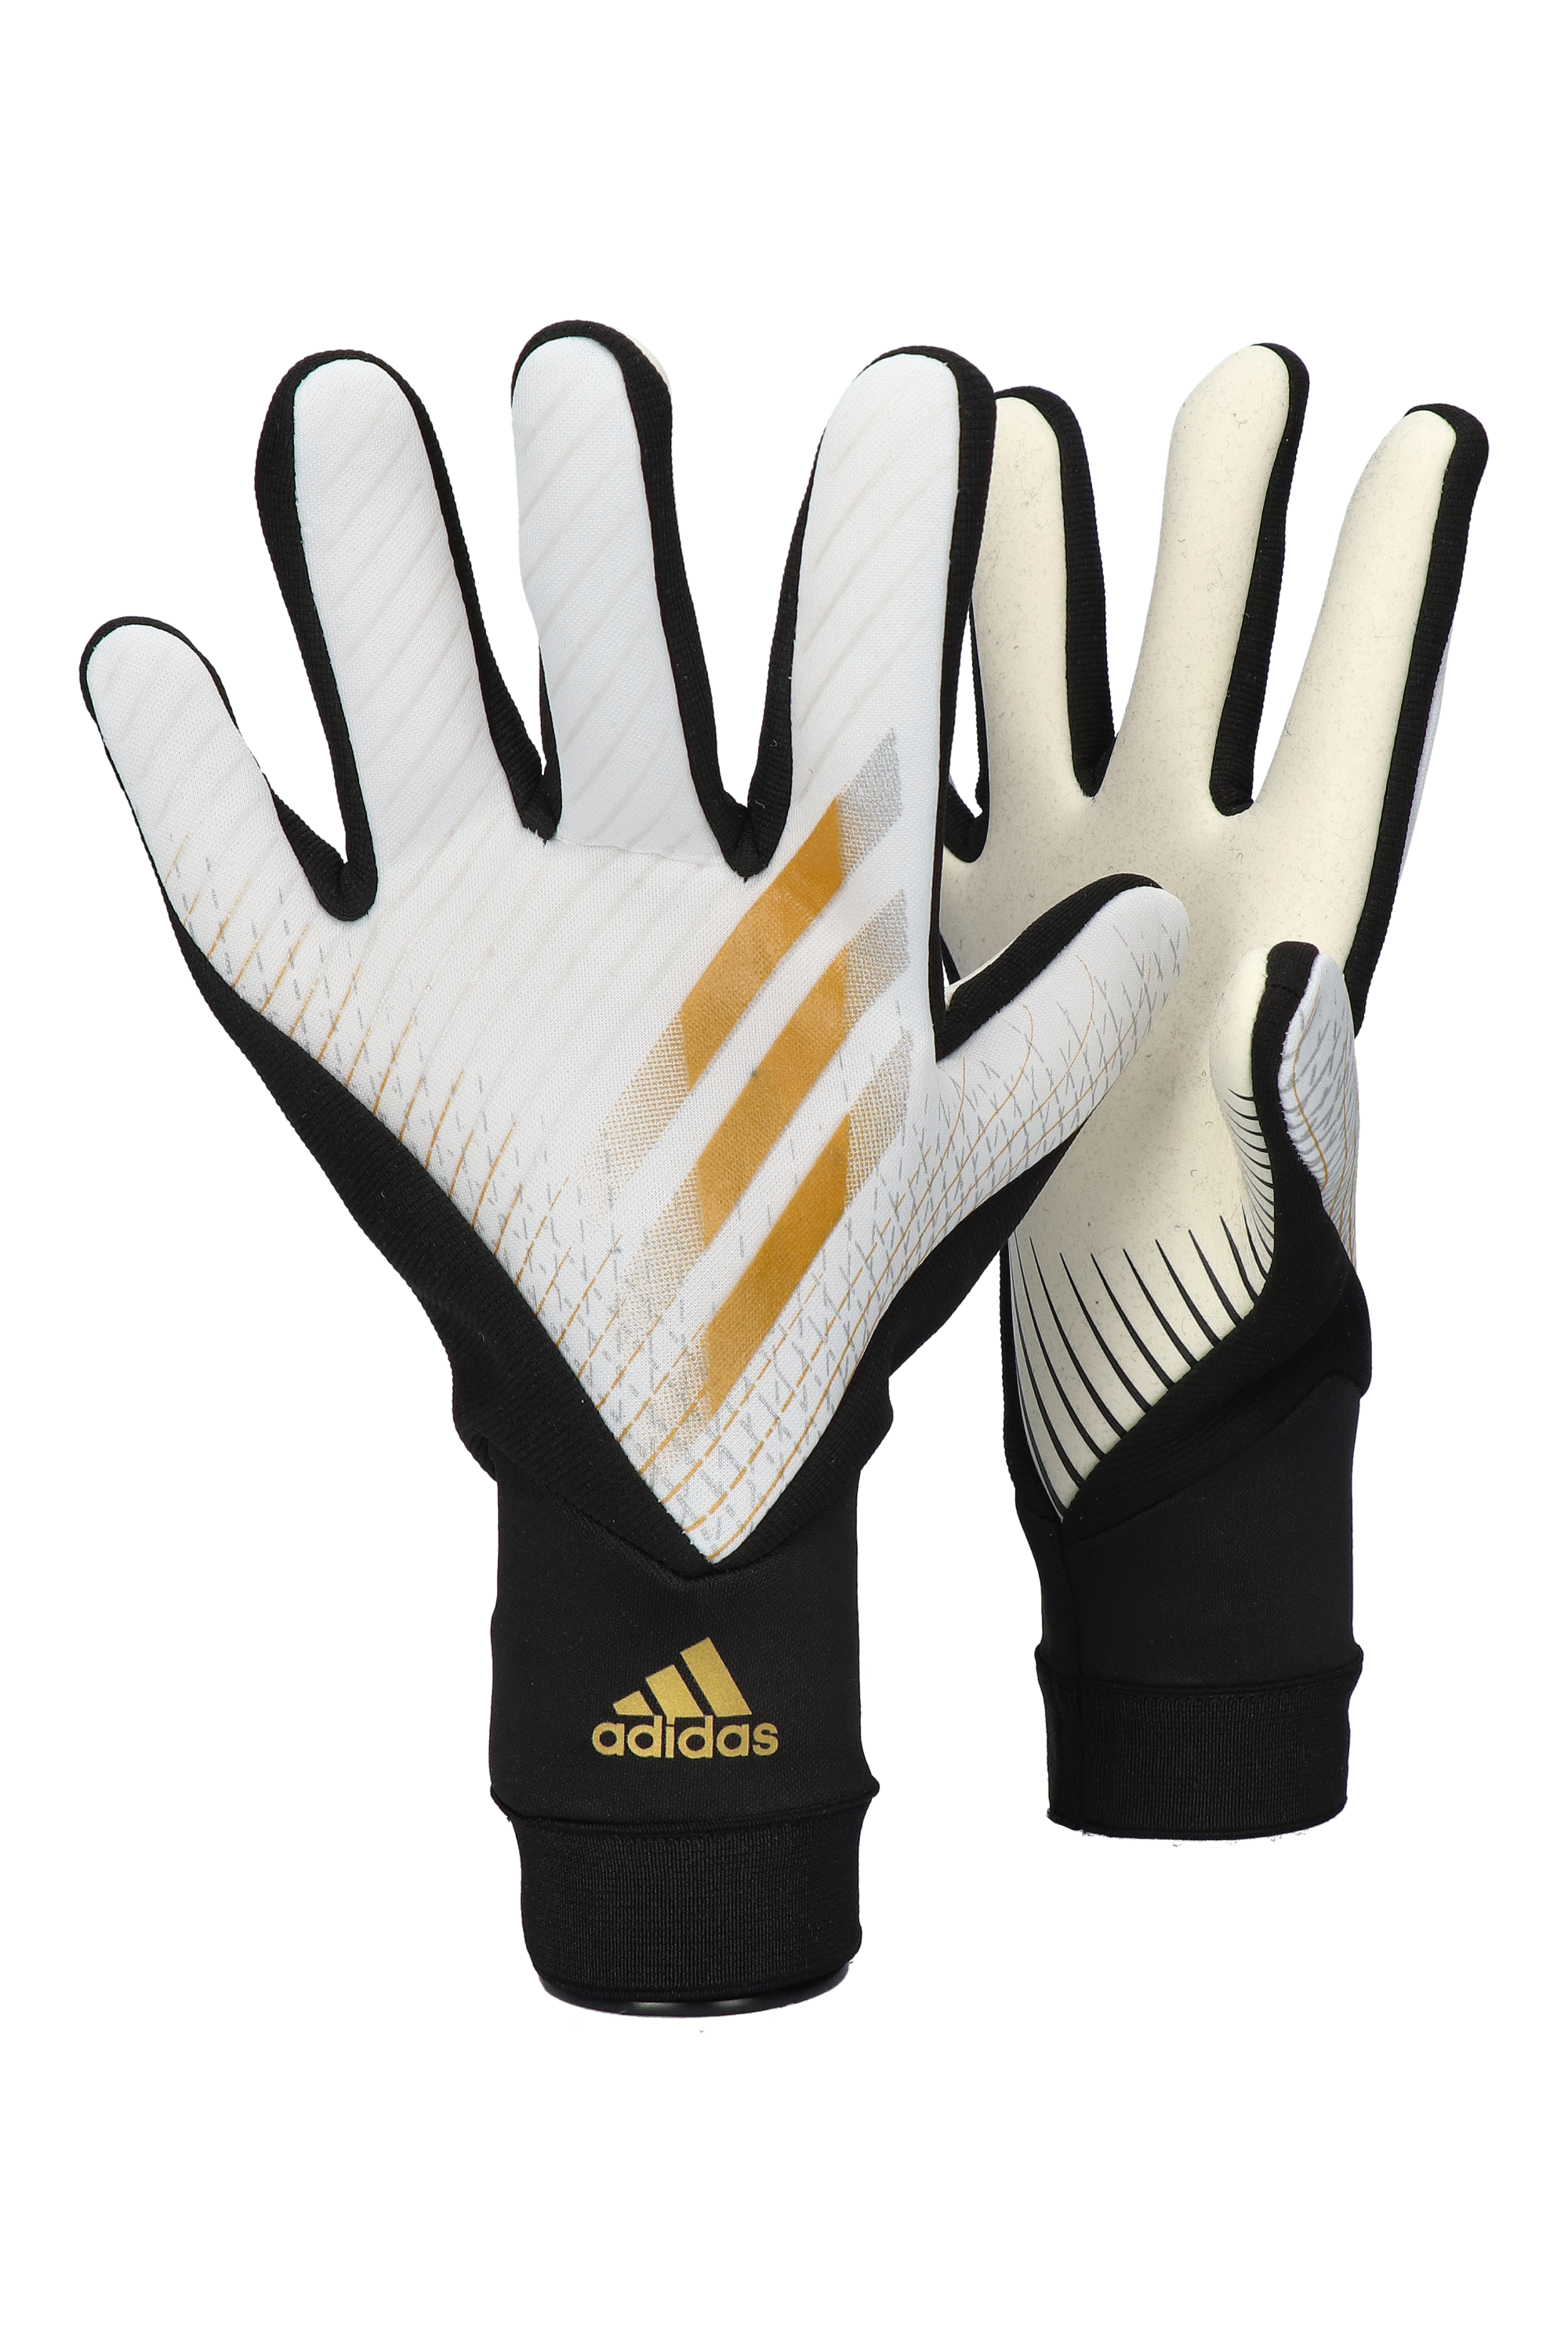 Goalkeeper Gloves adidas X GL LGE | R-GOL.com - Football boots u0026 equipment